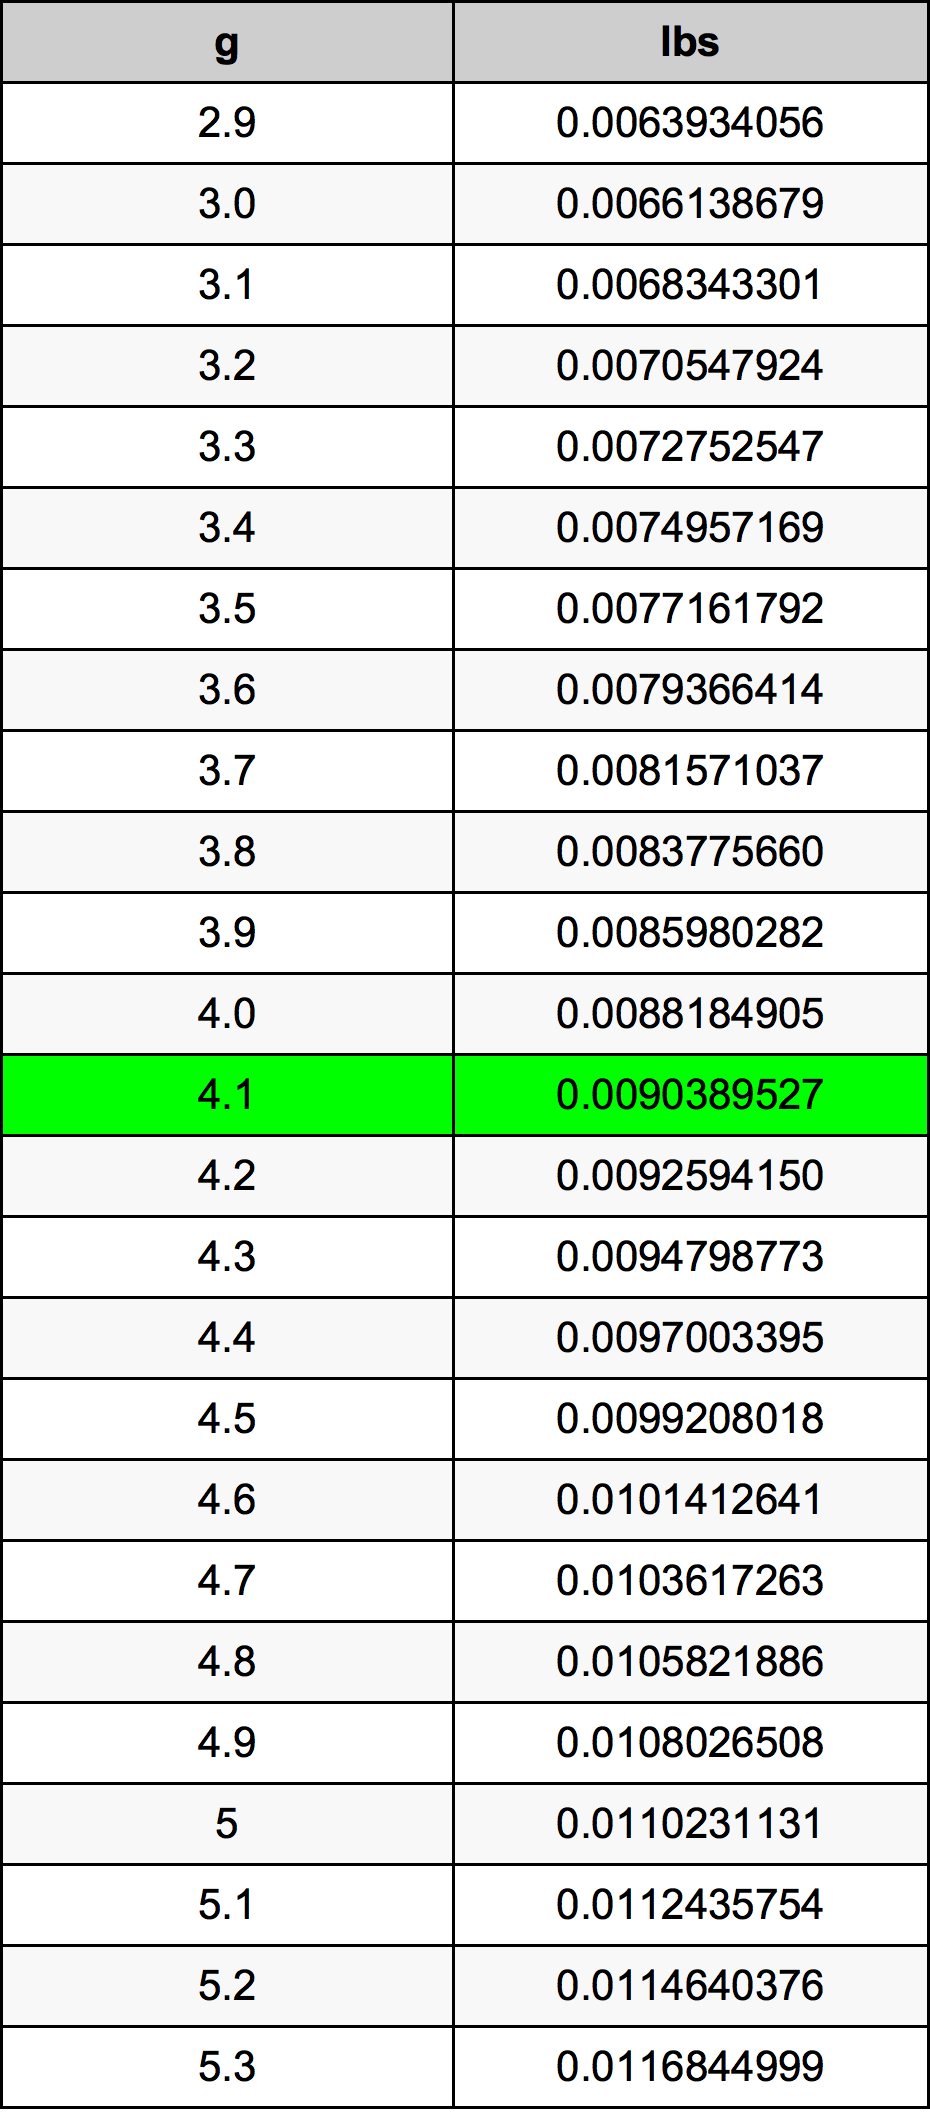 4.1 غرام جدول تحويل